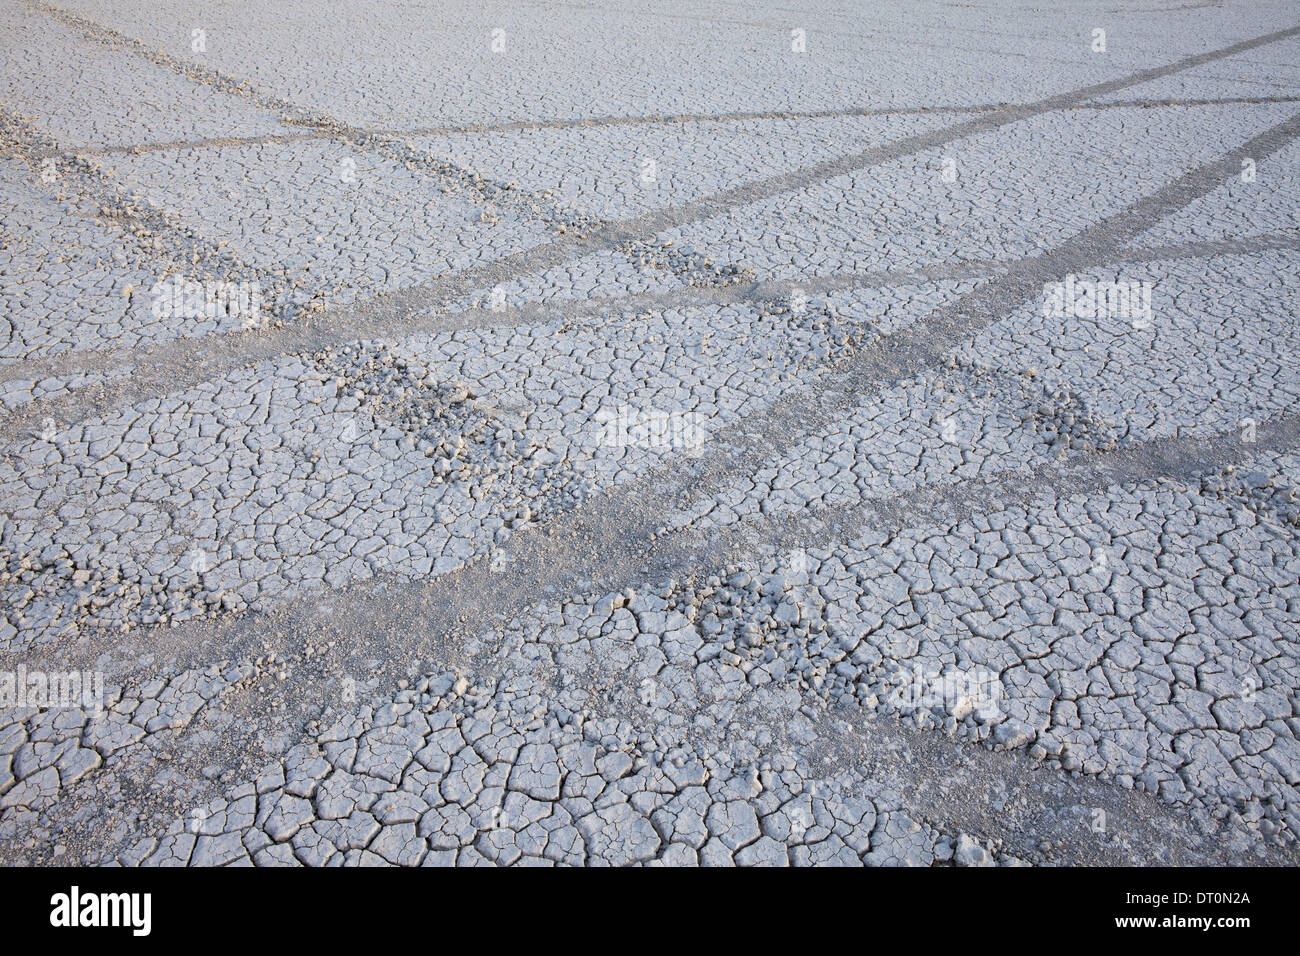 Black Rock Desert Nevada USA Tyre marks tracks in the playa salt pan surface Stock Photo